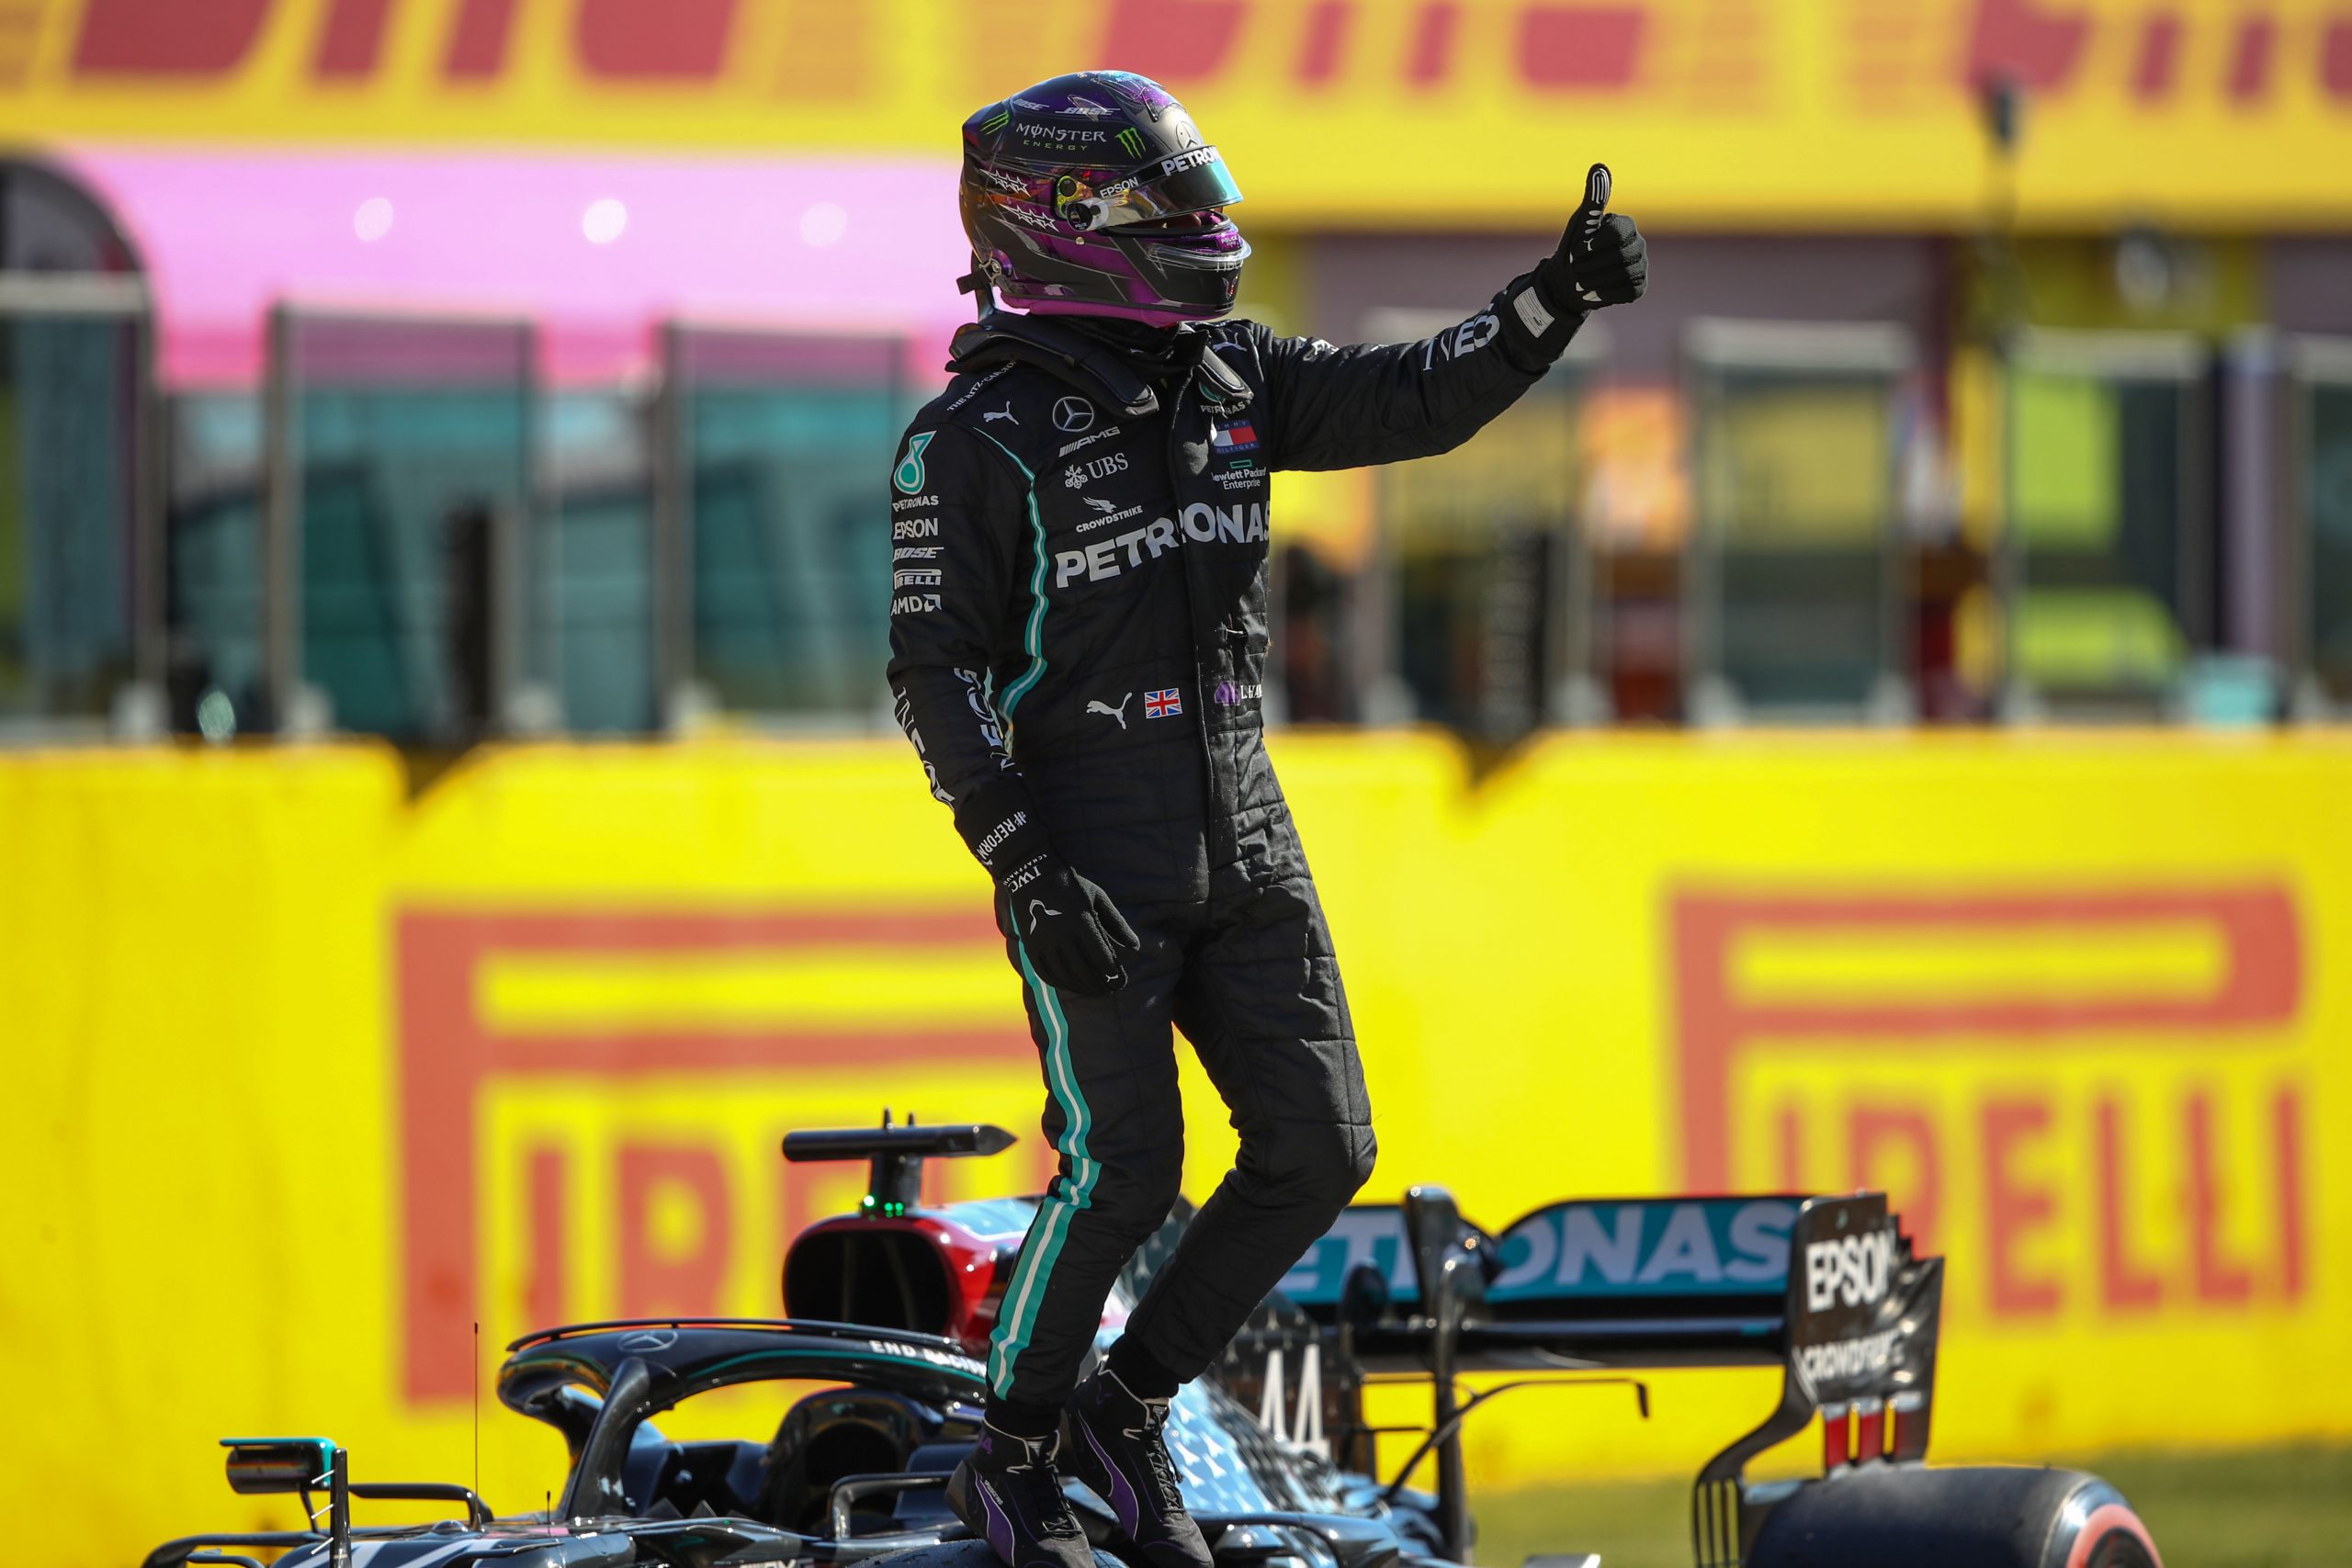 Not my choice: Lewis Hamilton not comfortable racing in Saudi Arabia